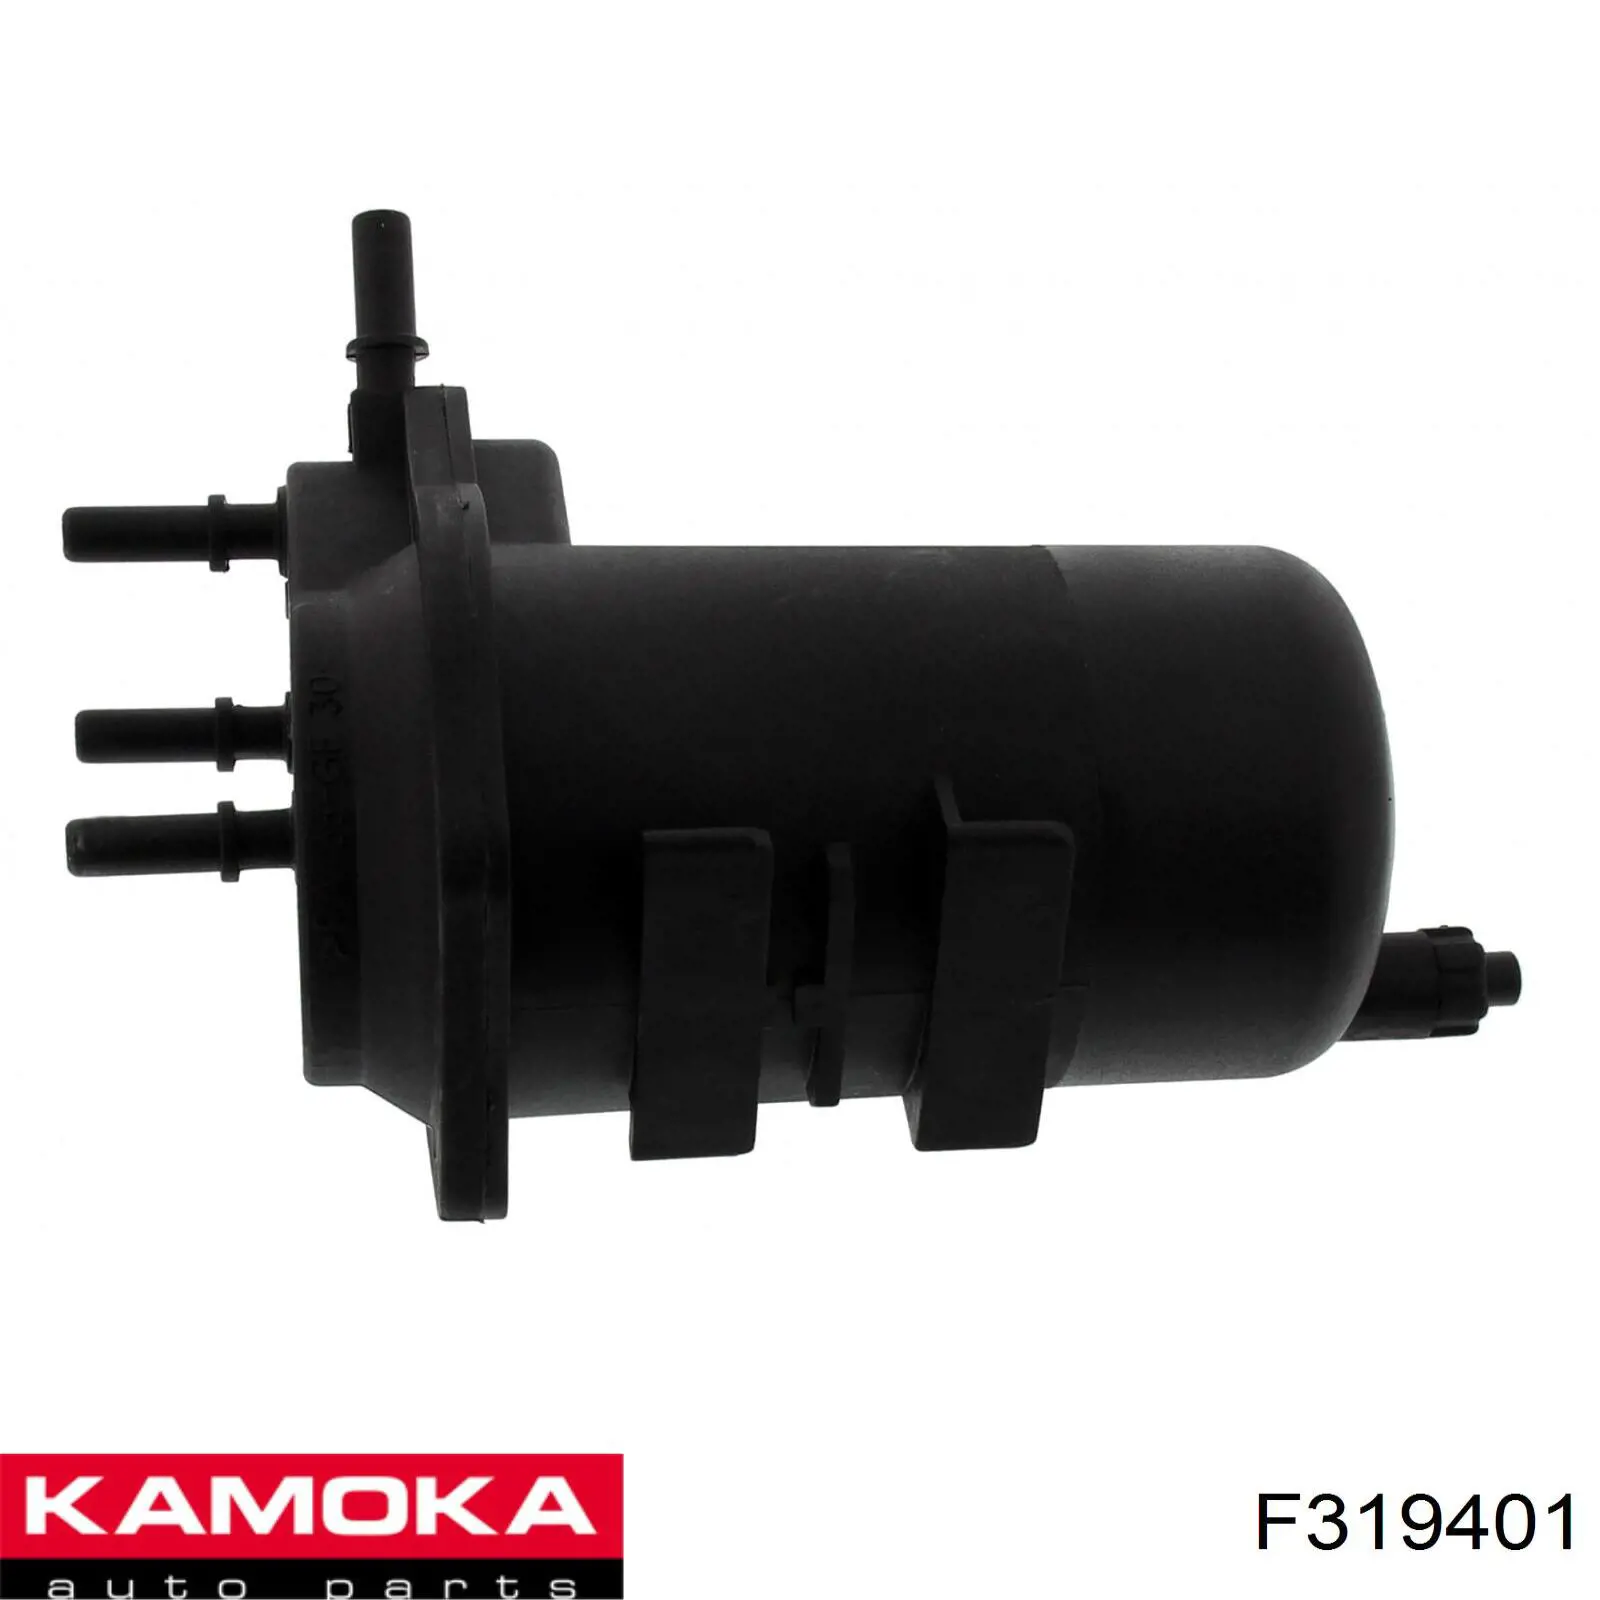 F319401 Kamoka filtro combustible